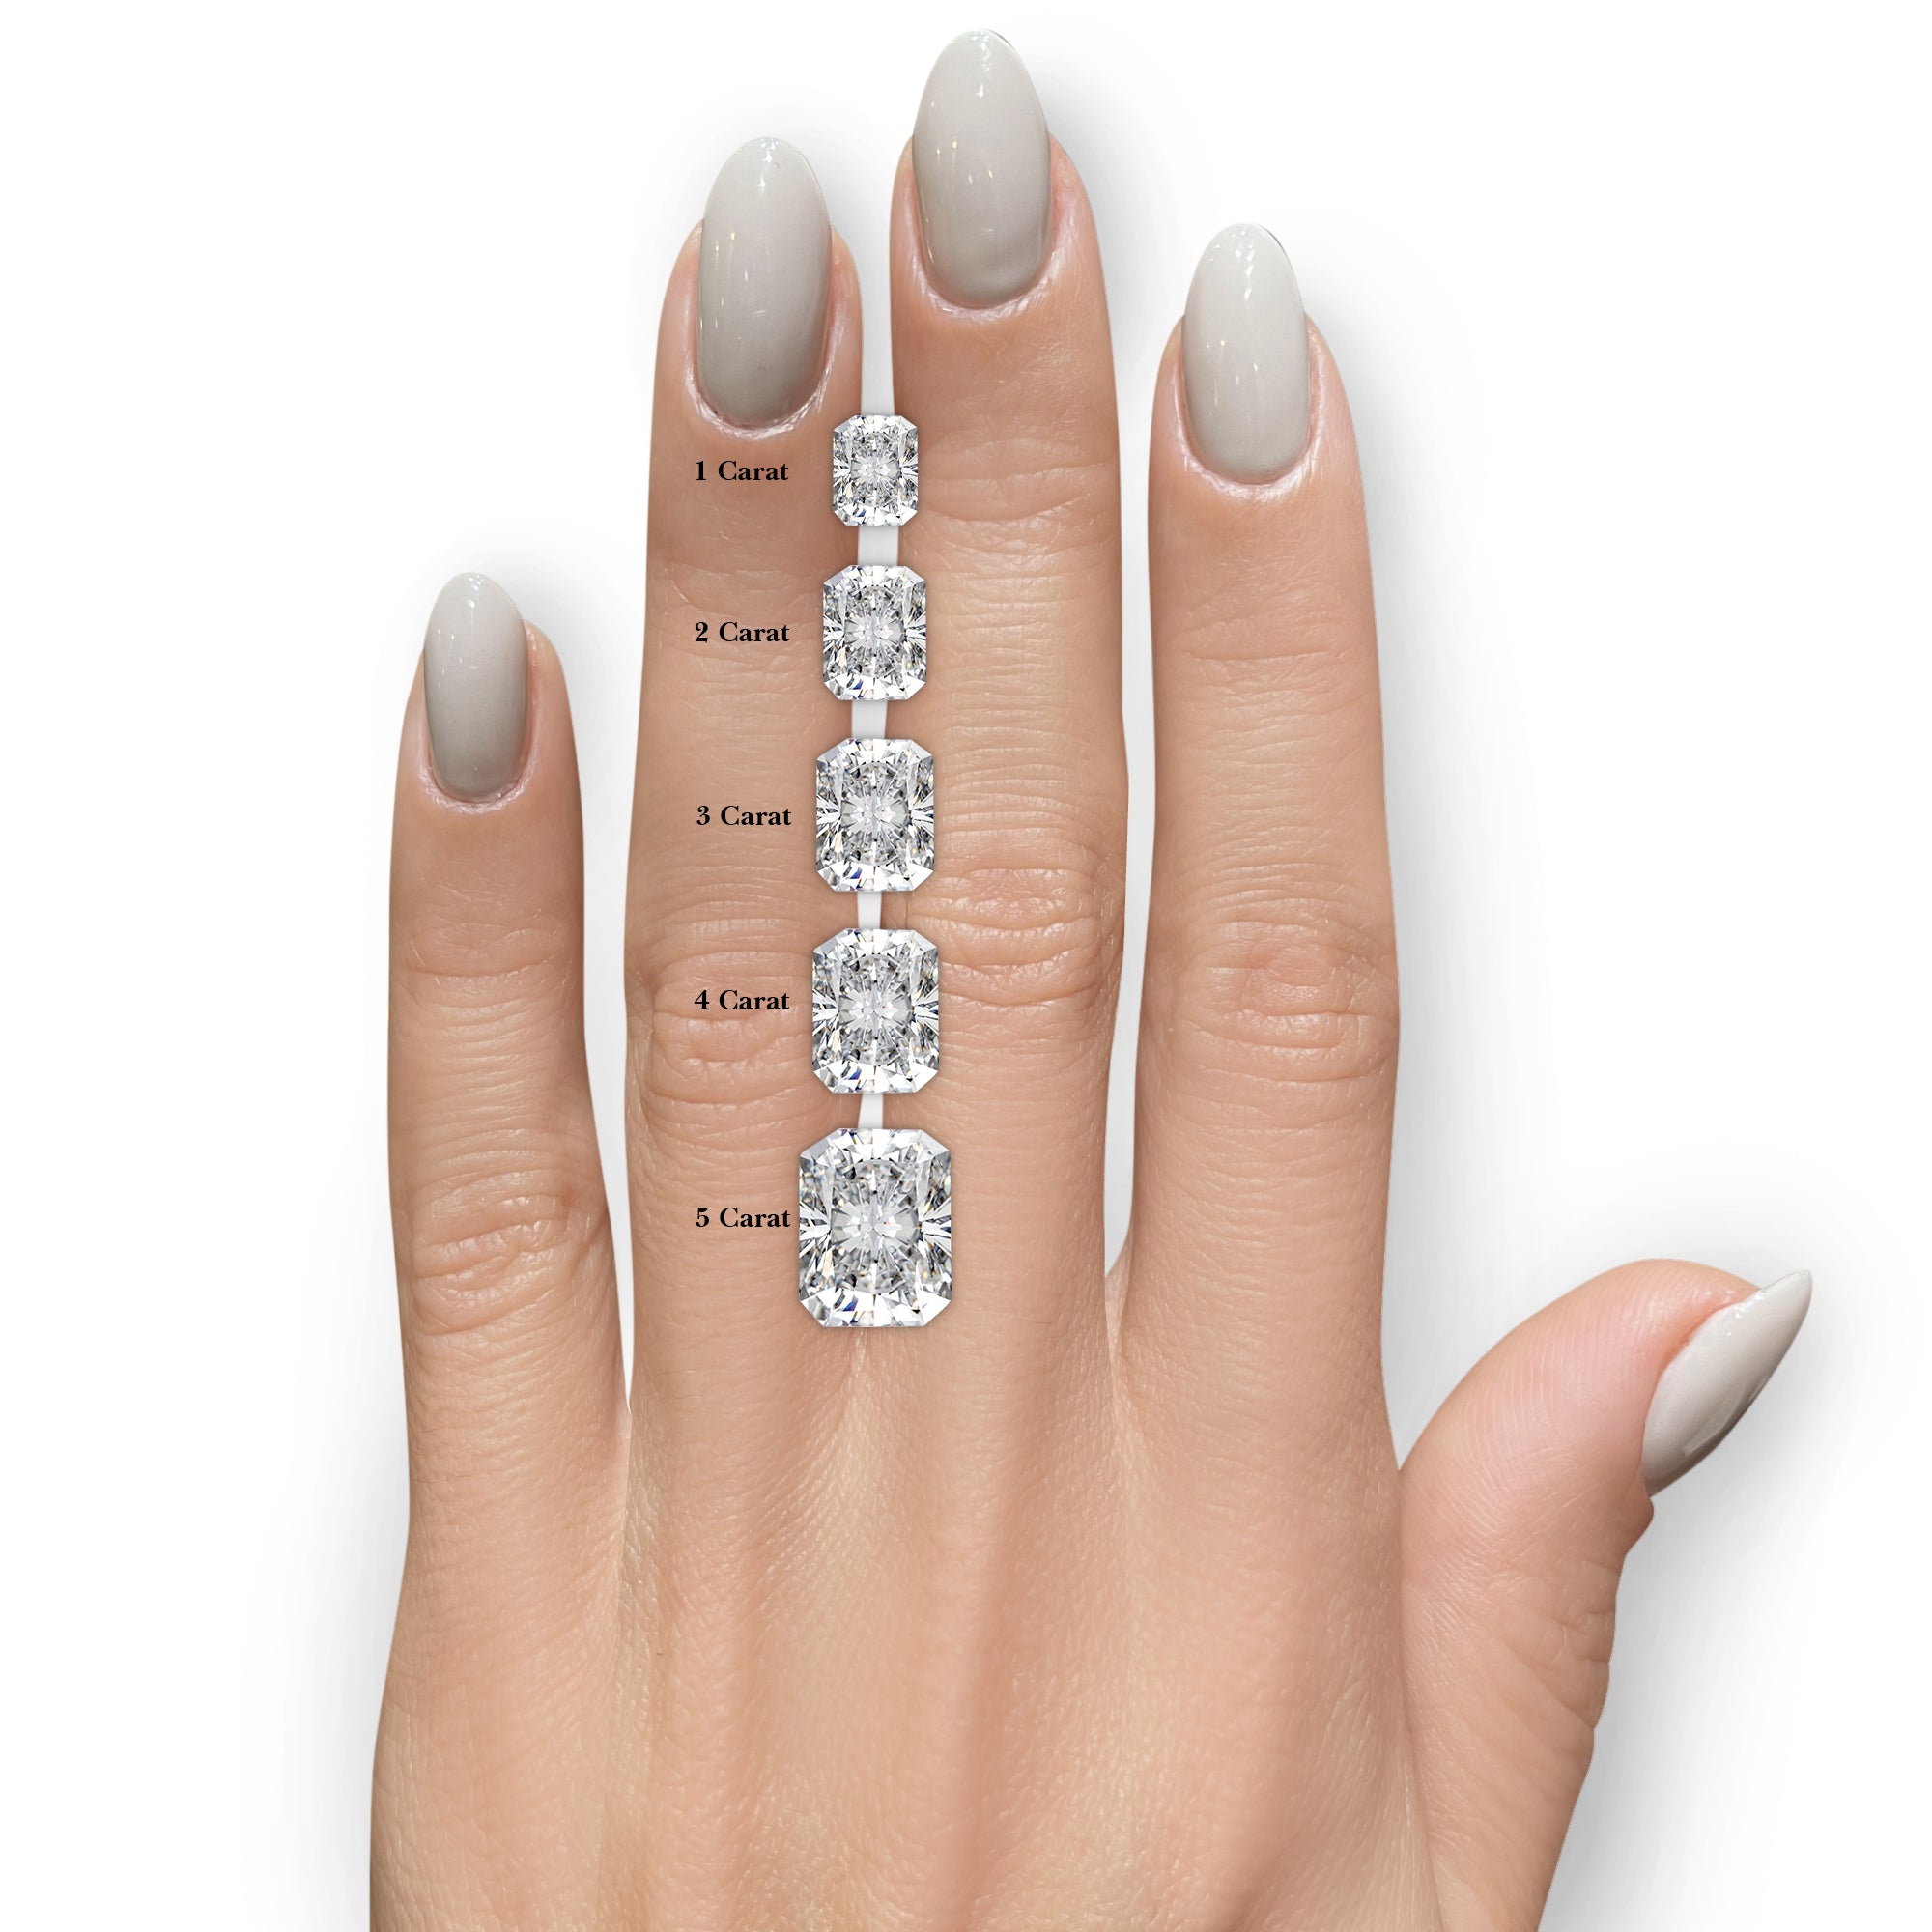 FINEROCK 1/5 Carat Diamond Engagement Rings in 14K Rose Gold (Ring Size 4)  (I1-I2 Clarity) | Amazon.com